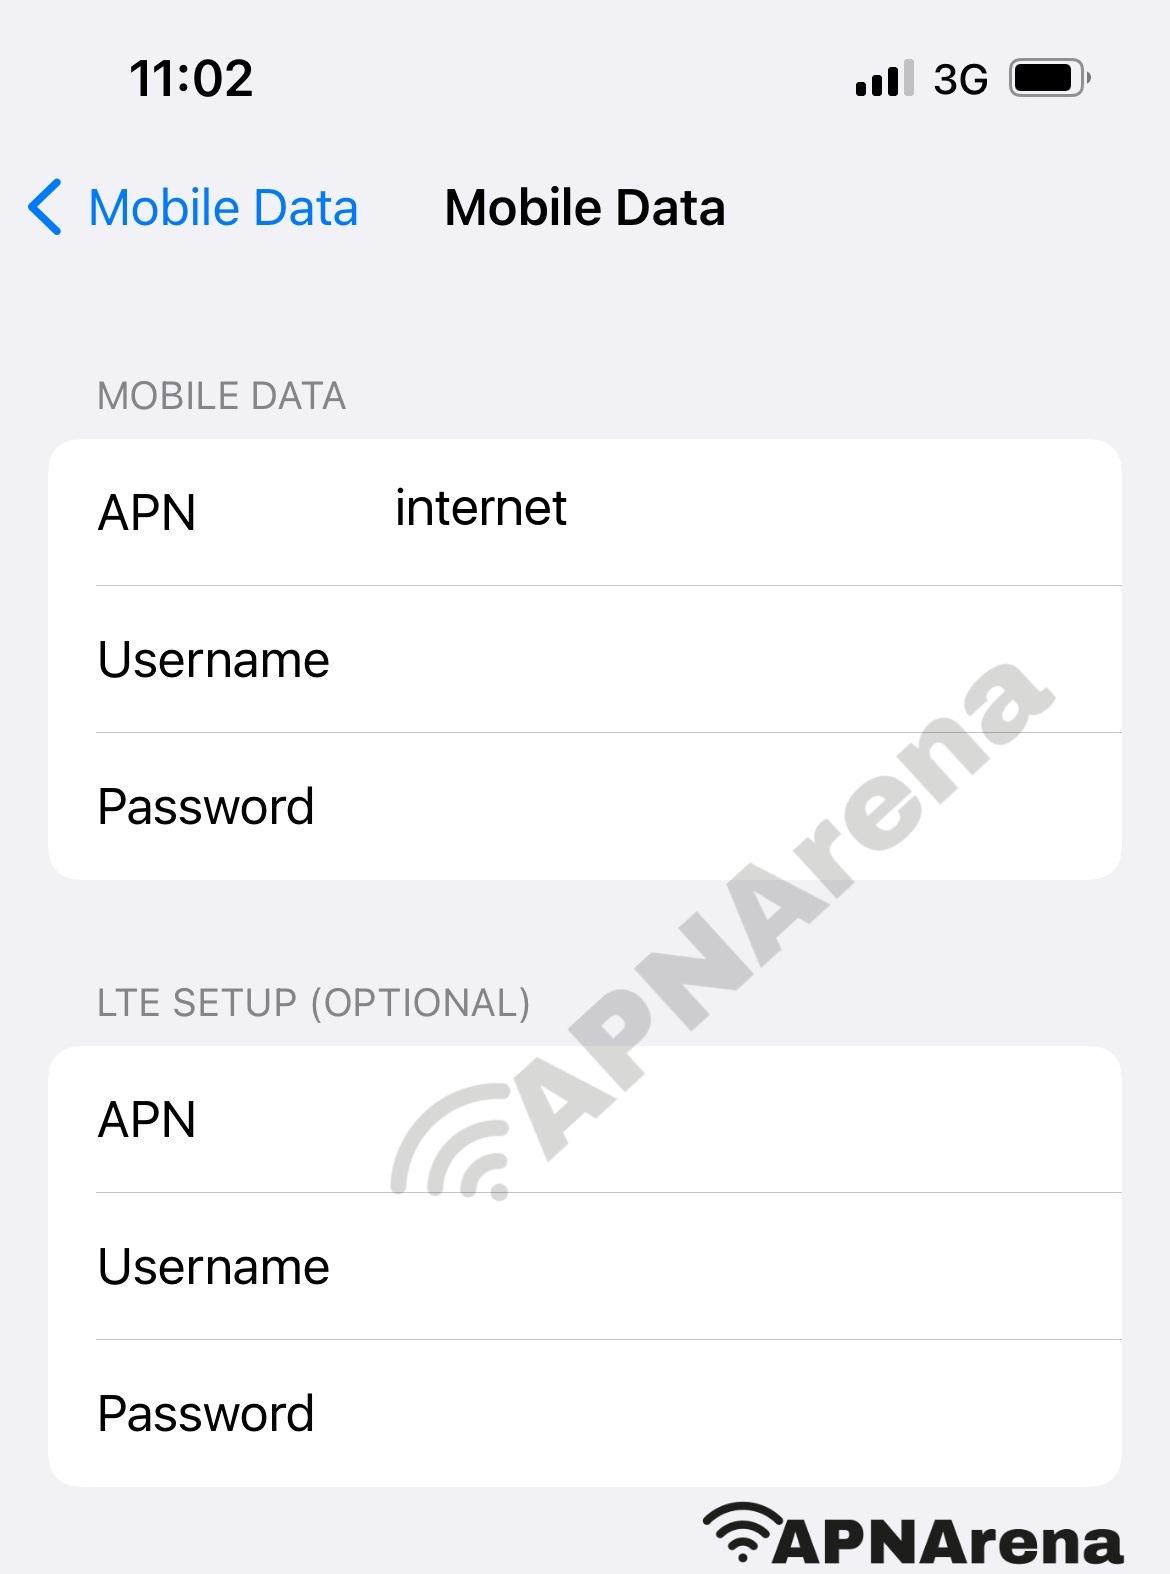 Telefonia Mobile Sammarinese (TMS) APN Settings for iPhone